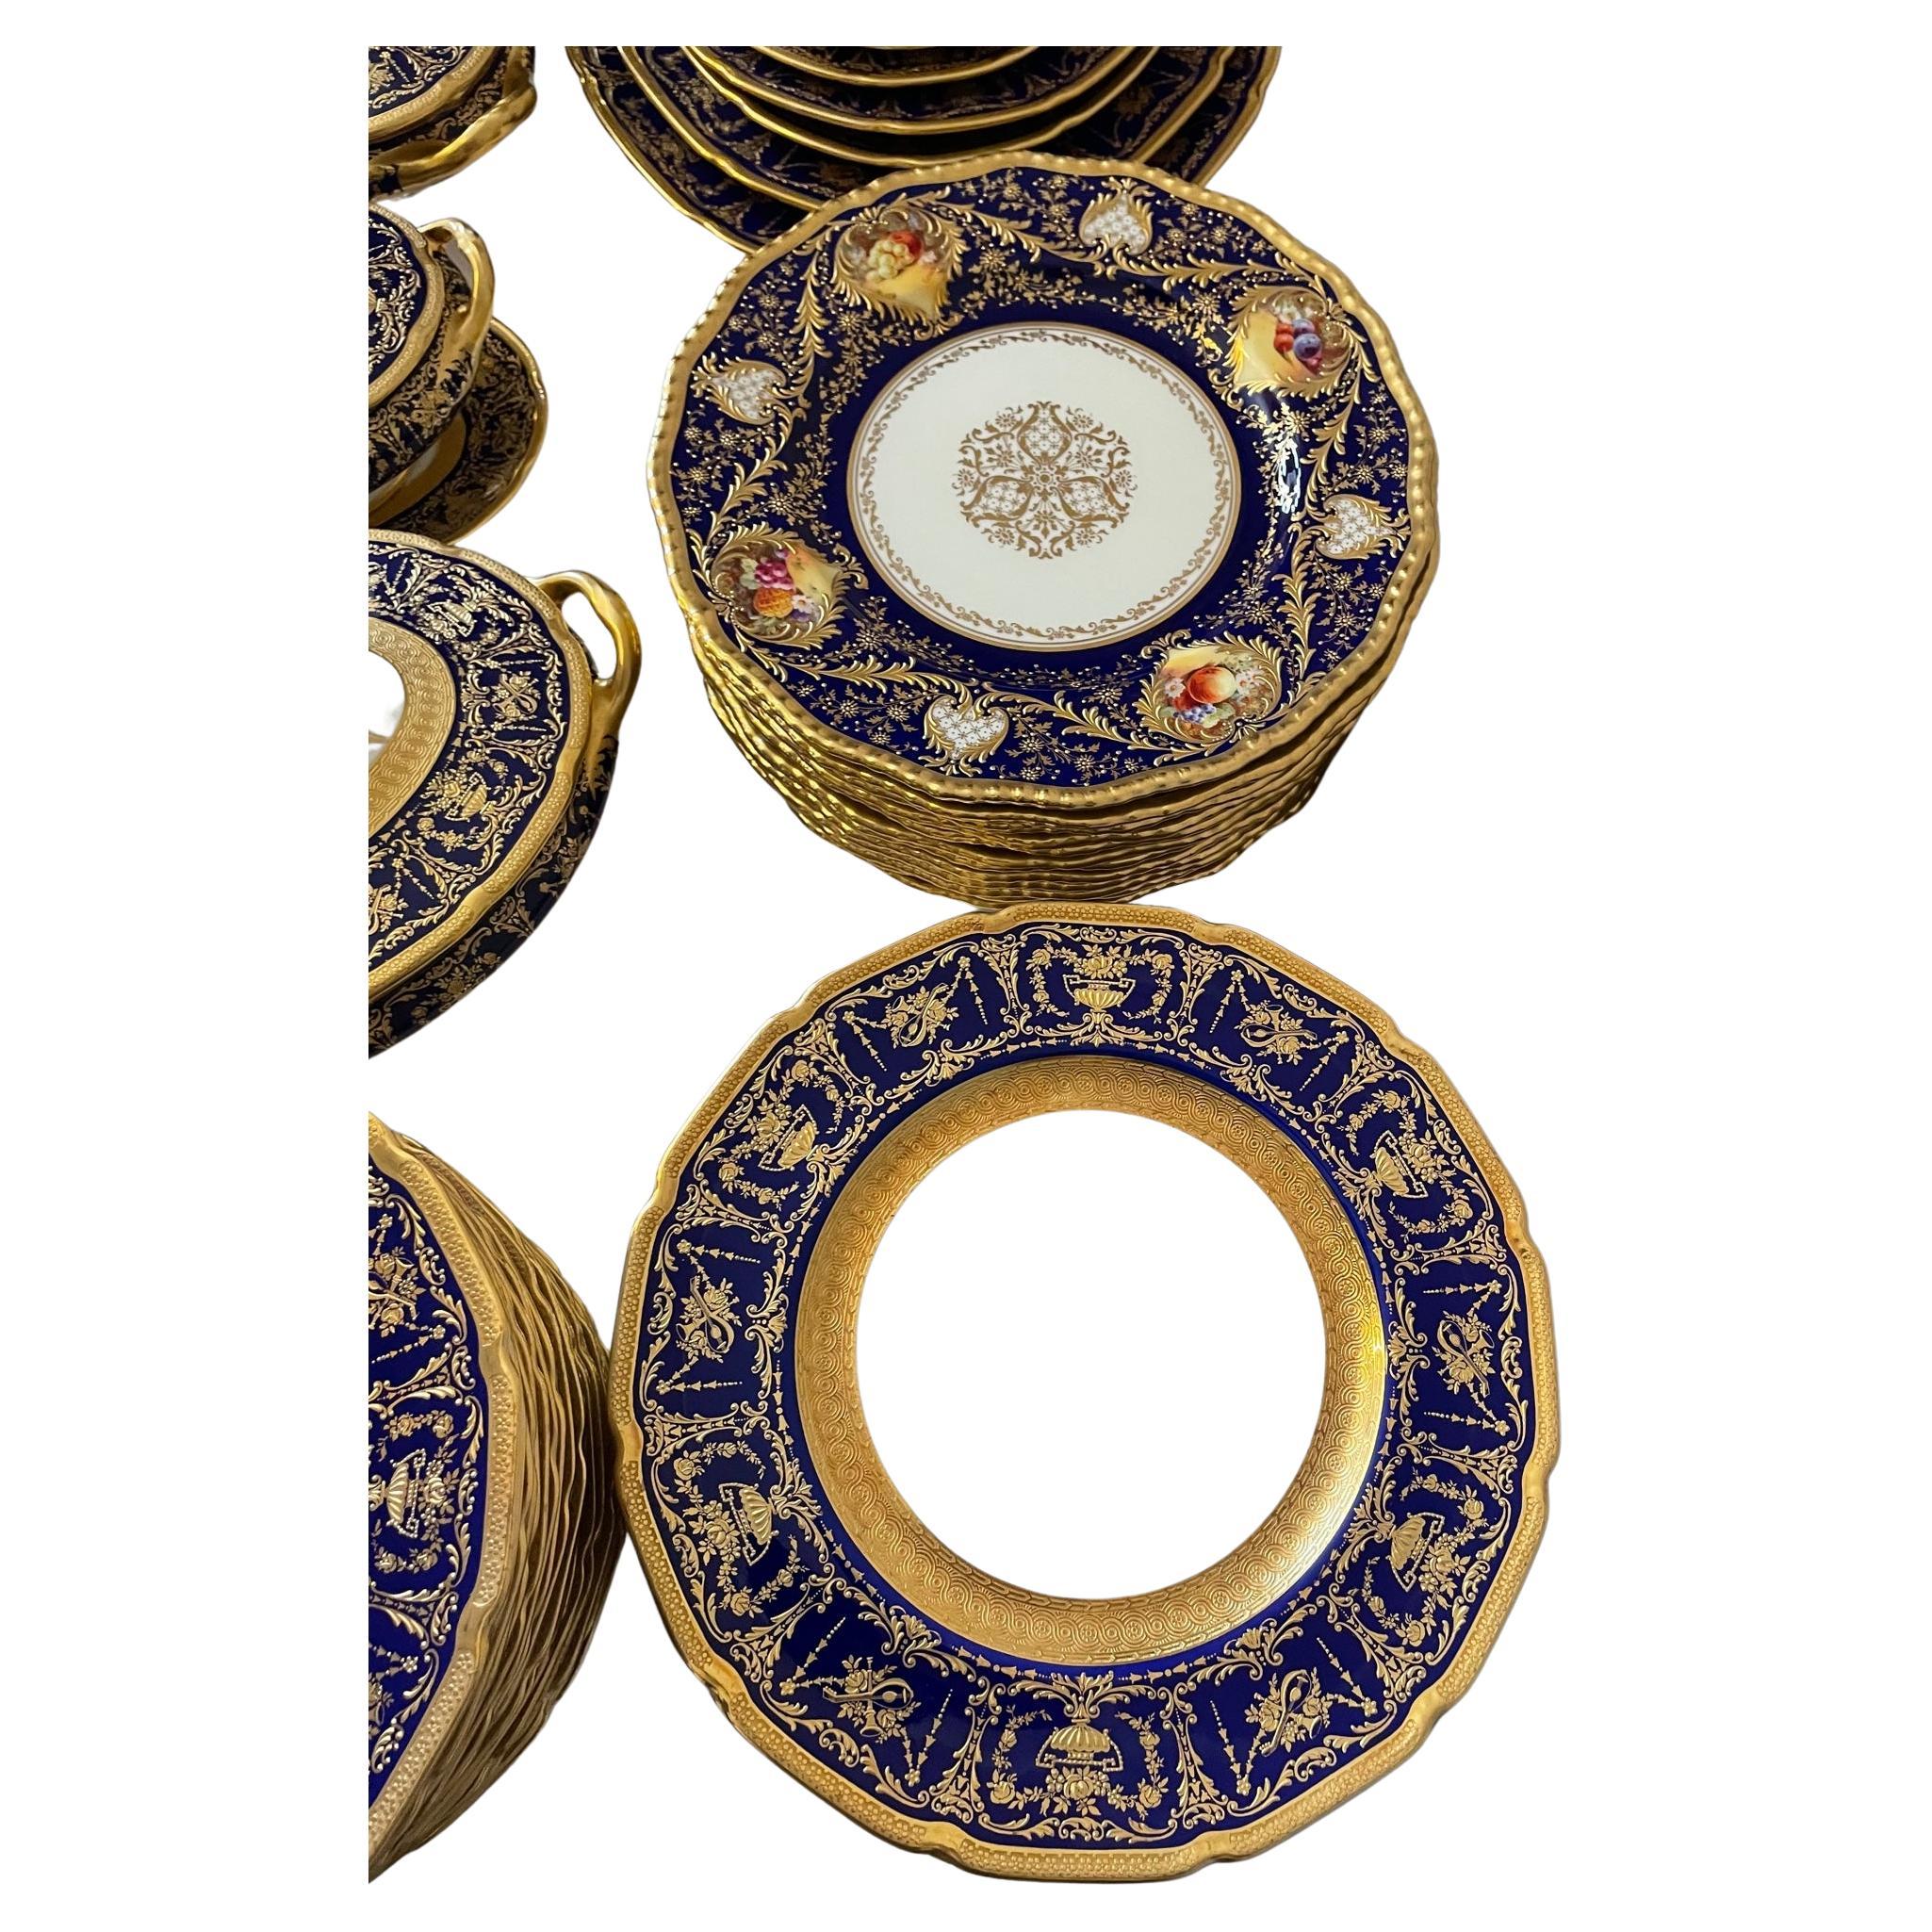 20th century English Porcelain Royal Doulton 94 Serving Pieces, 1920s